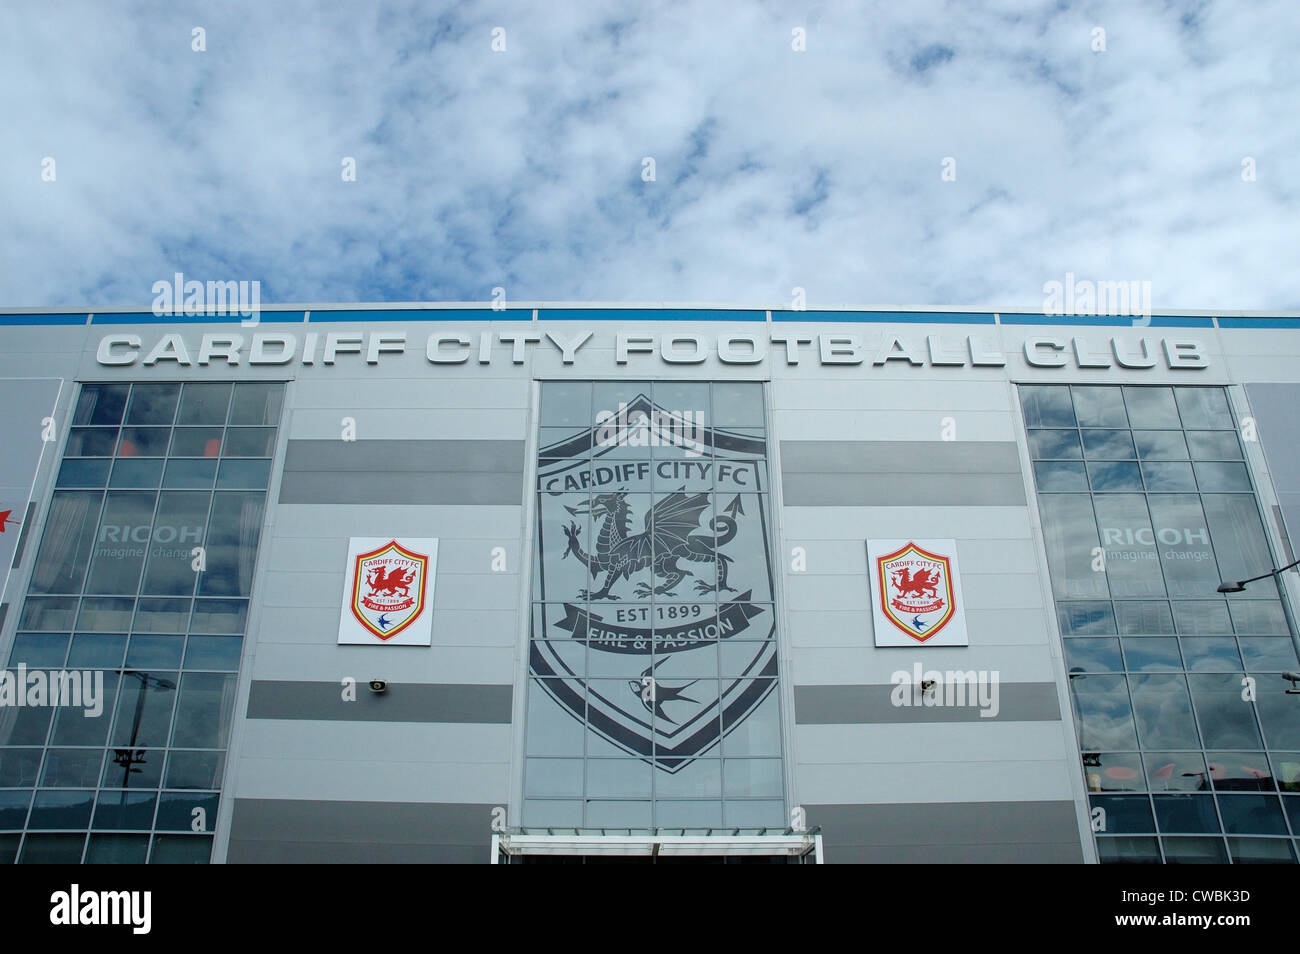 Cardiff city stadium Stock Photo